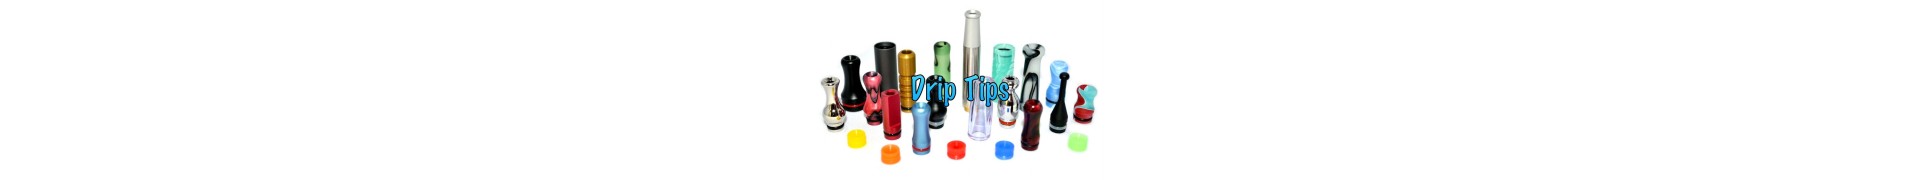 Drip tips